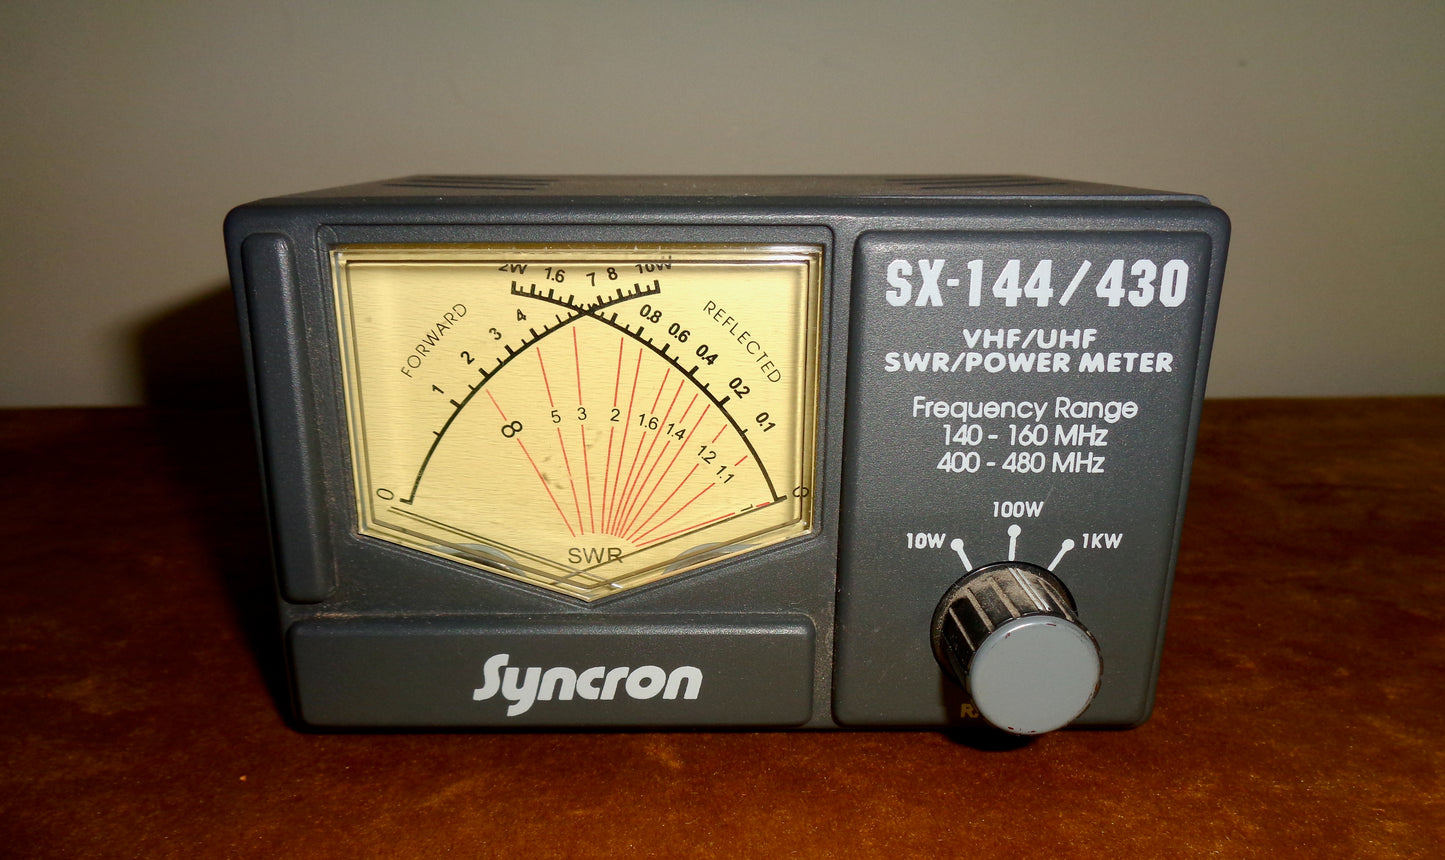 Syncron SX-144/430 VHF/UHF SWR / Power Meter